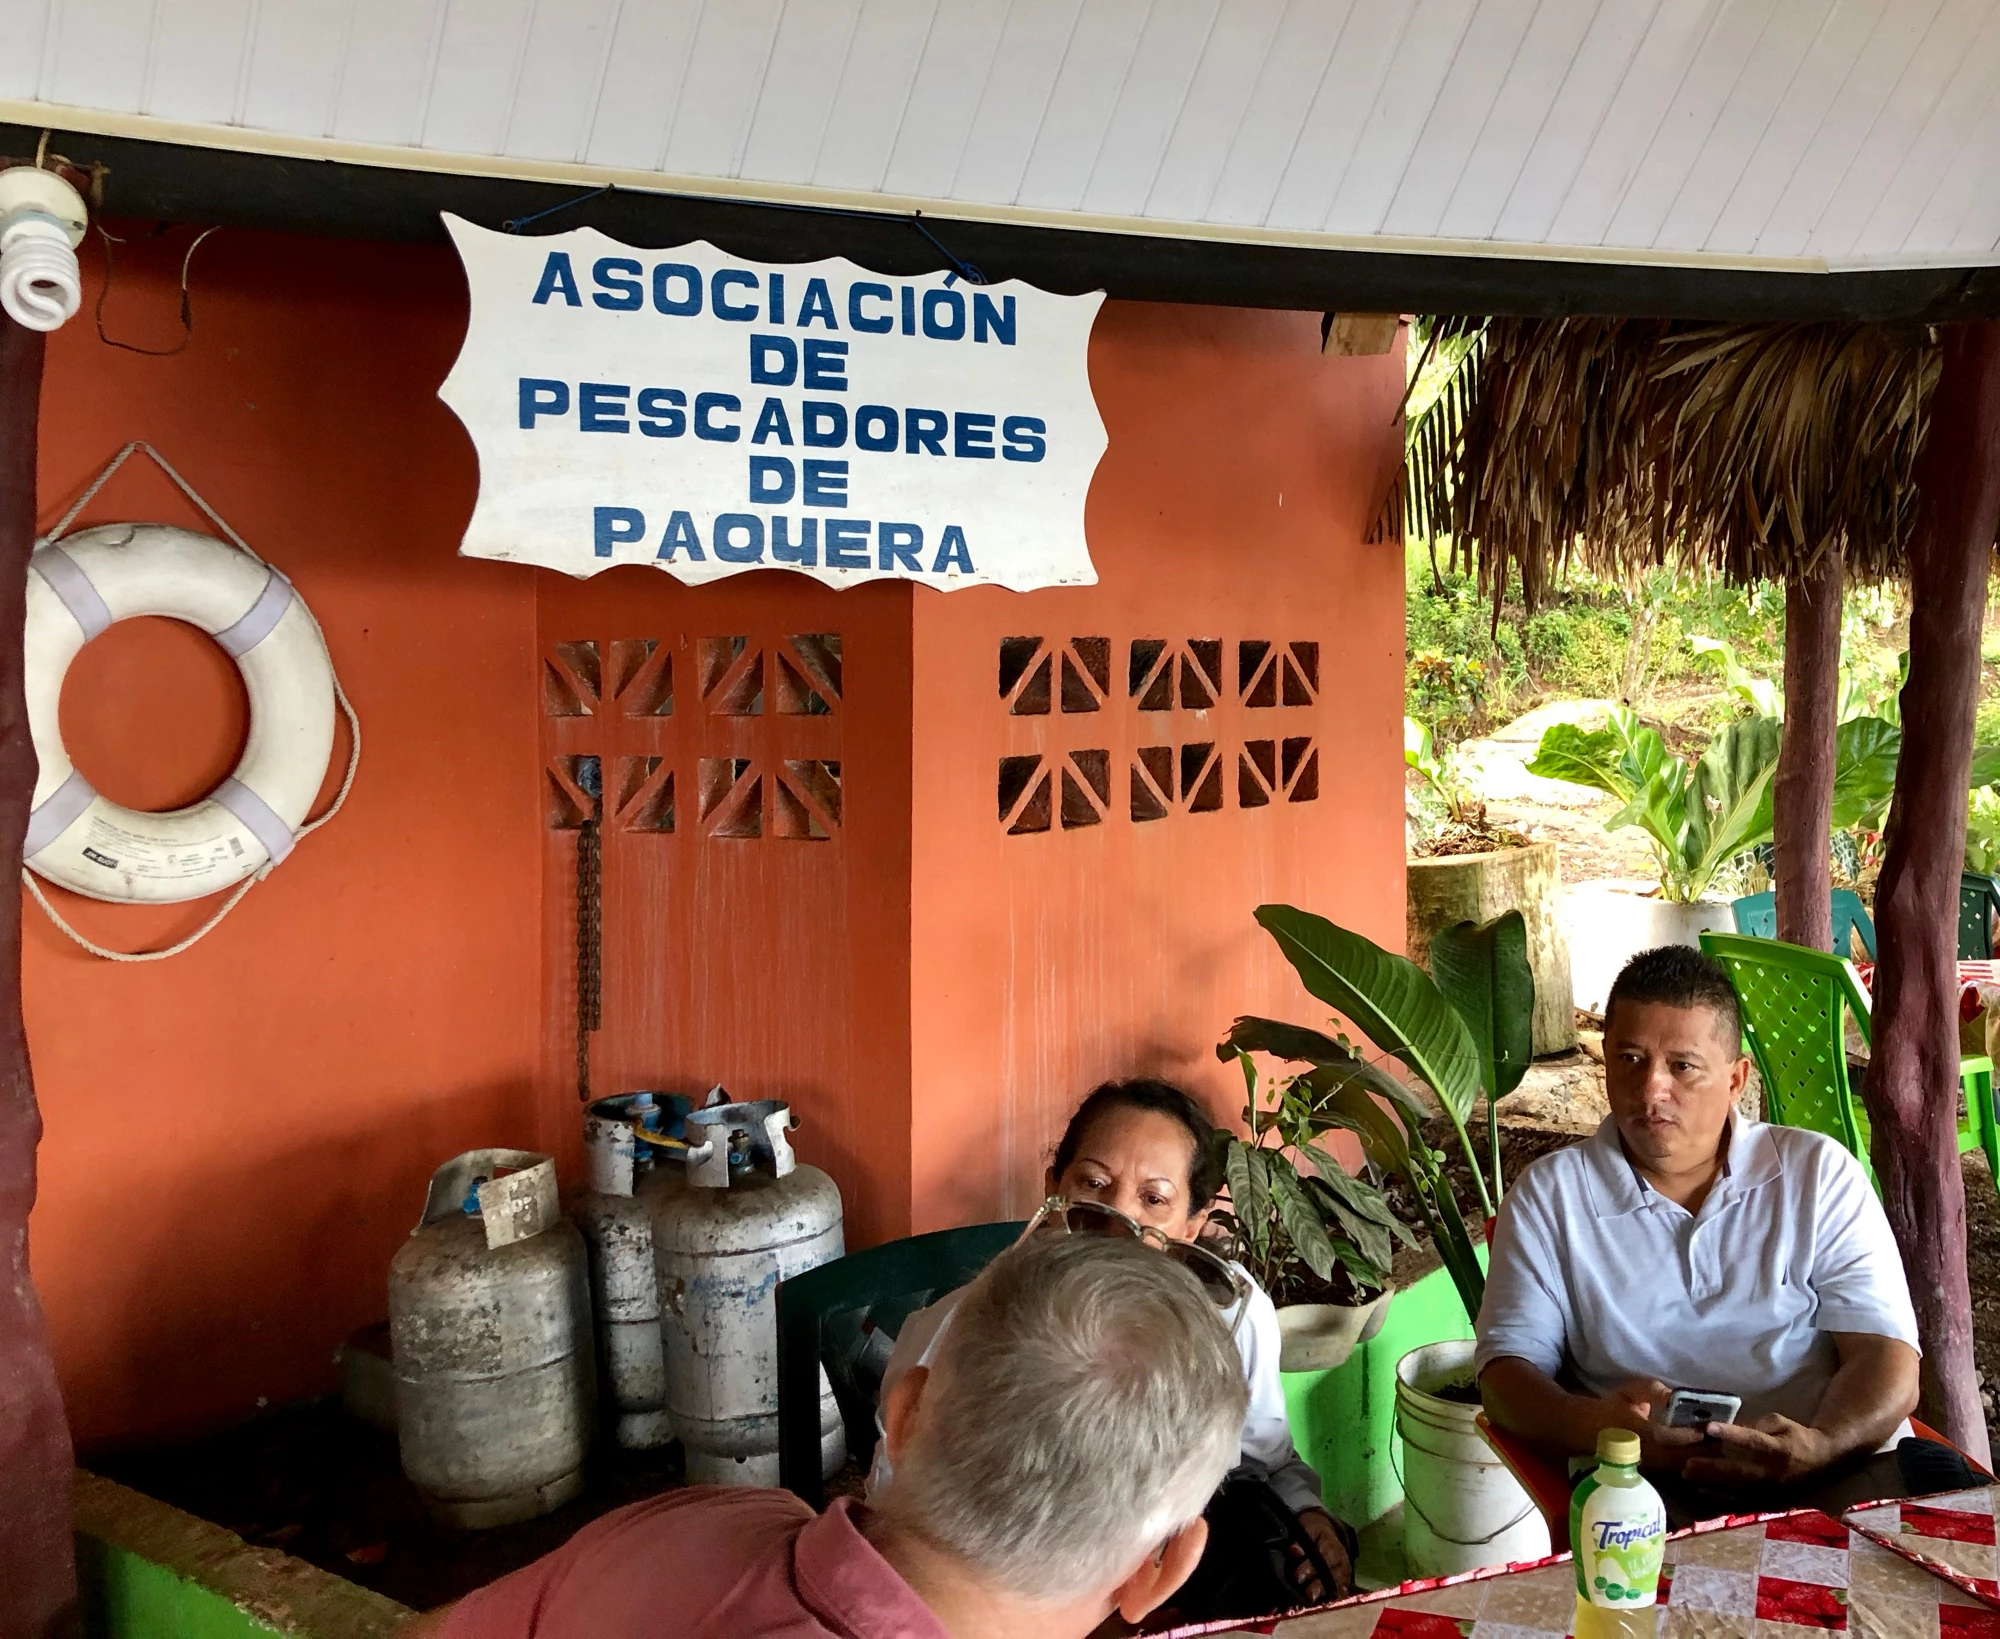 Fishermen association in Costa Rica